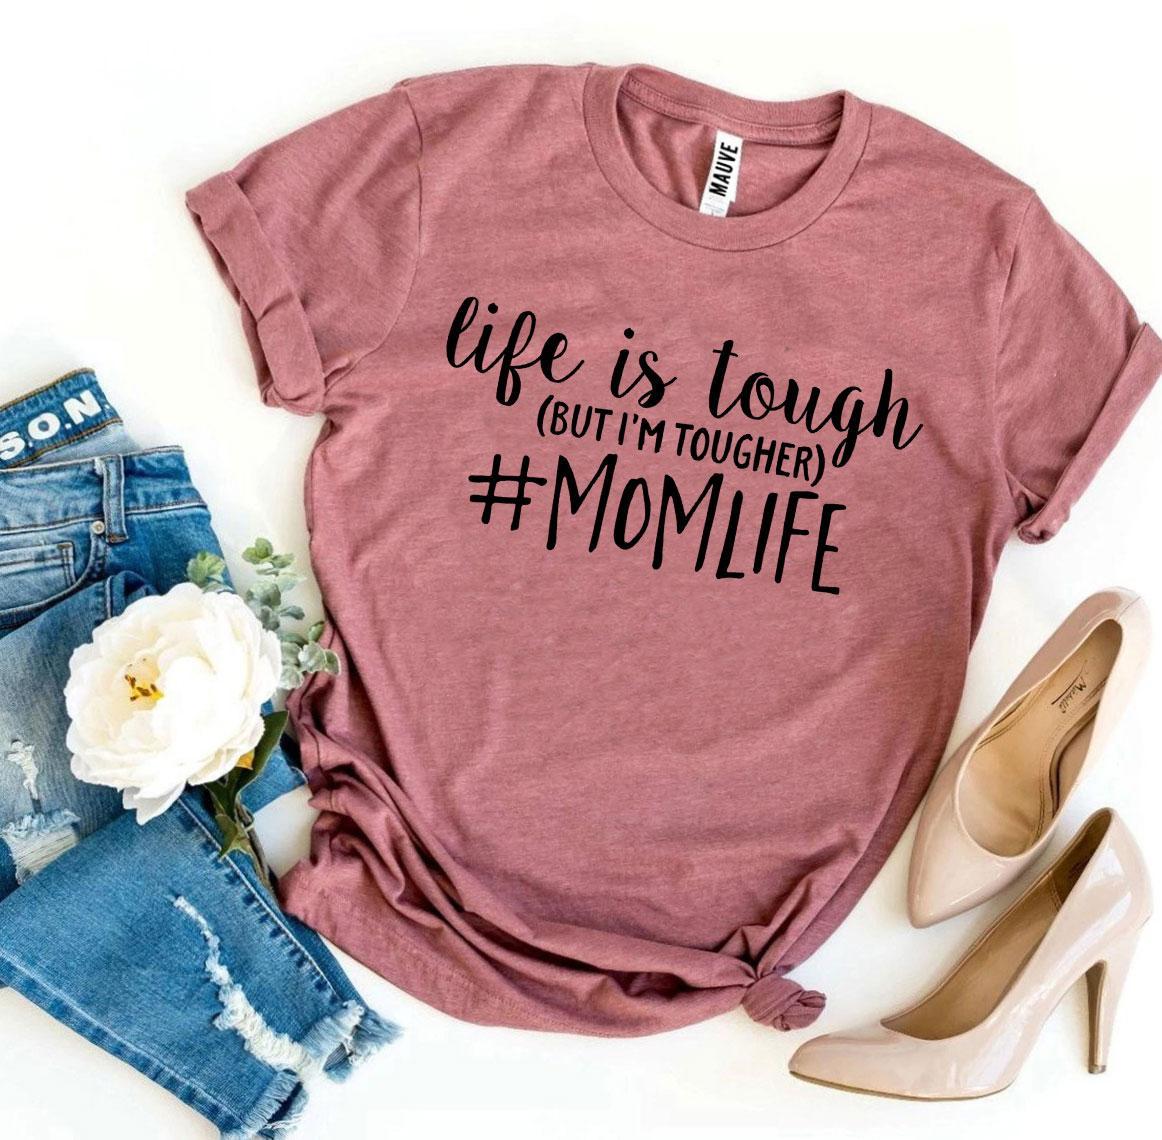 "#Momlife" cotton Printed T-shirt